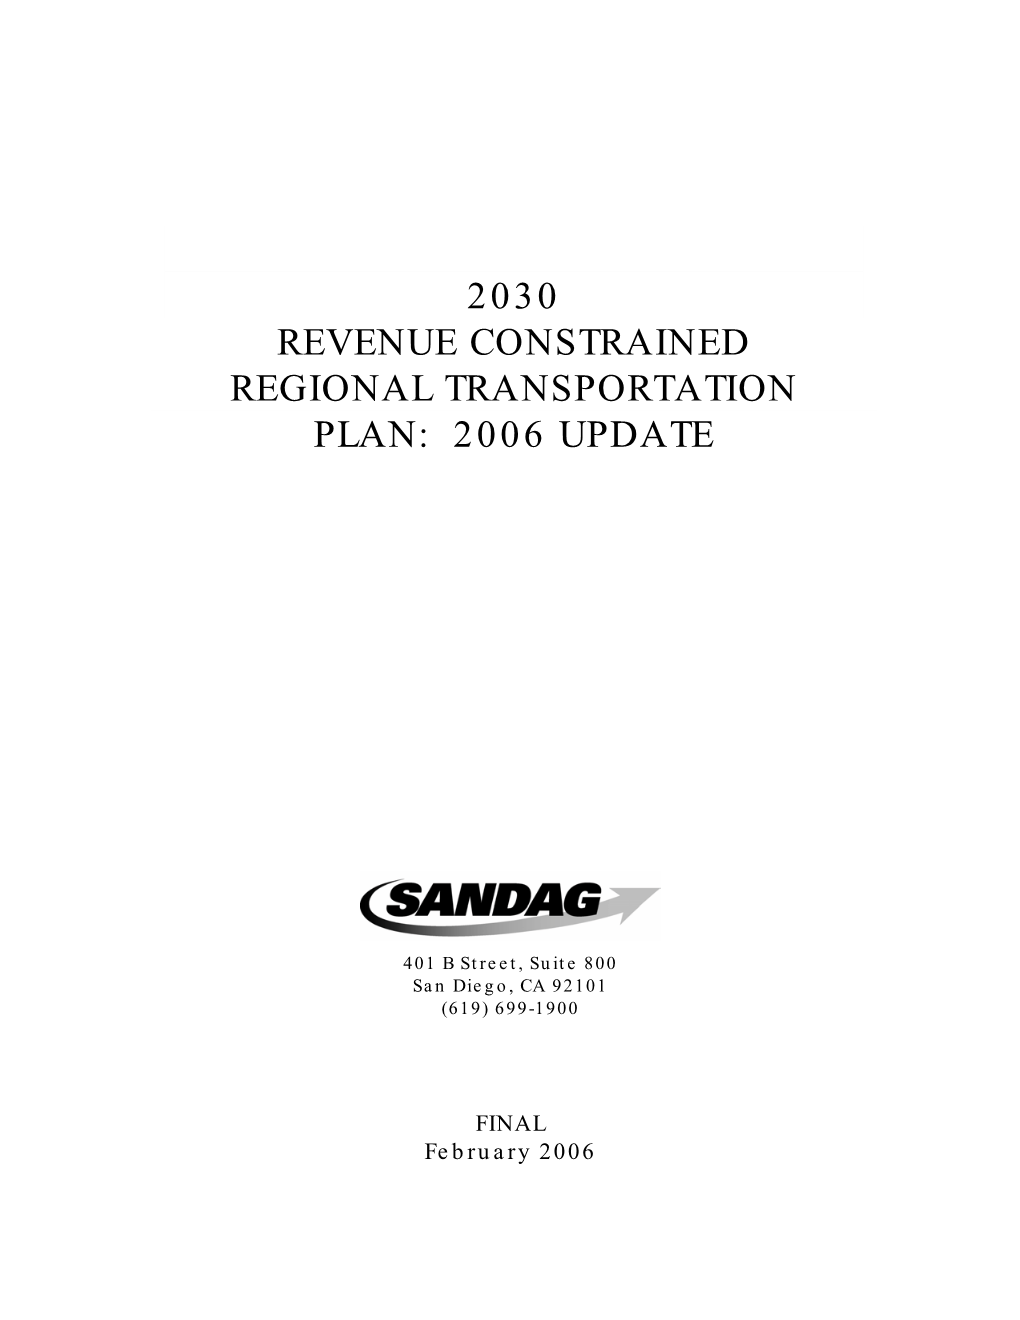 2030 Revenue Constrained Regional Transportation Plan: 2006 Update